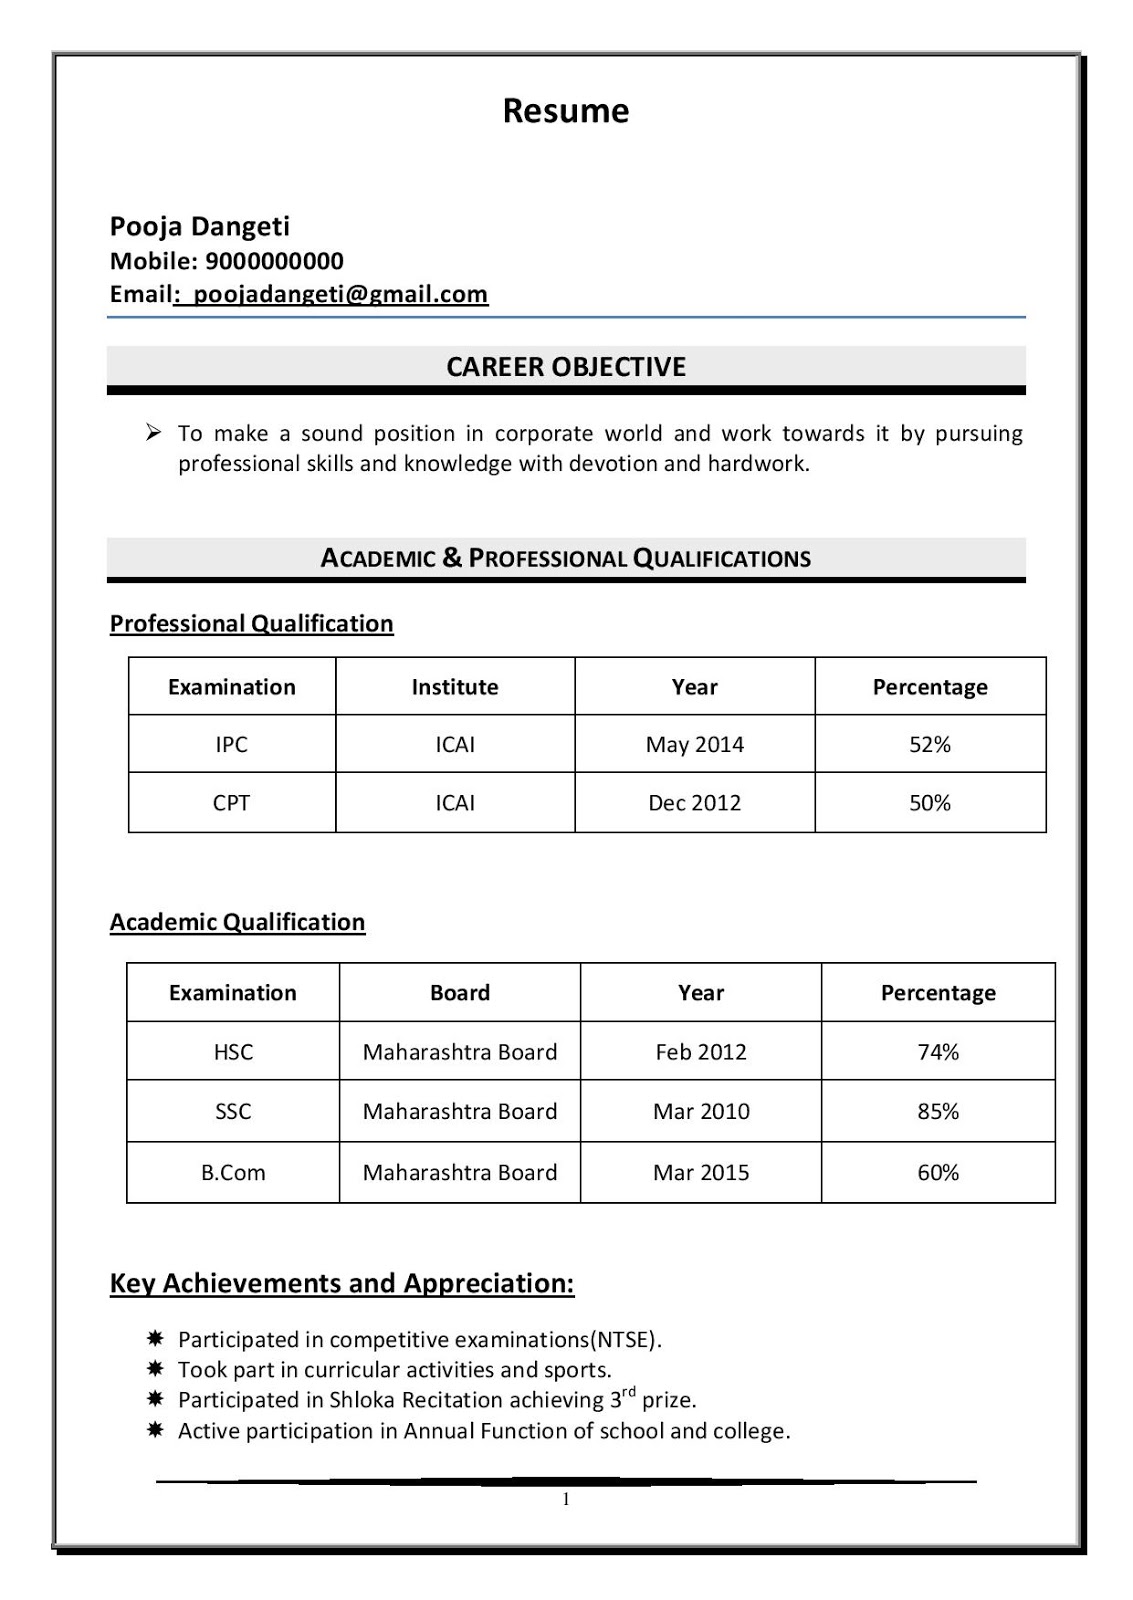 Good resume template for bcom freshers - Addictips